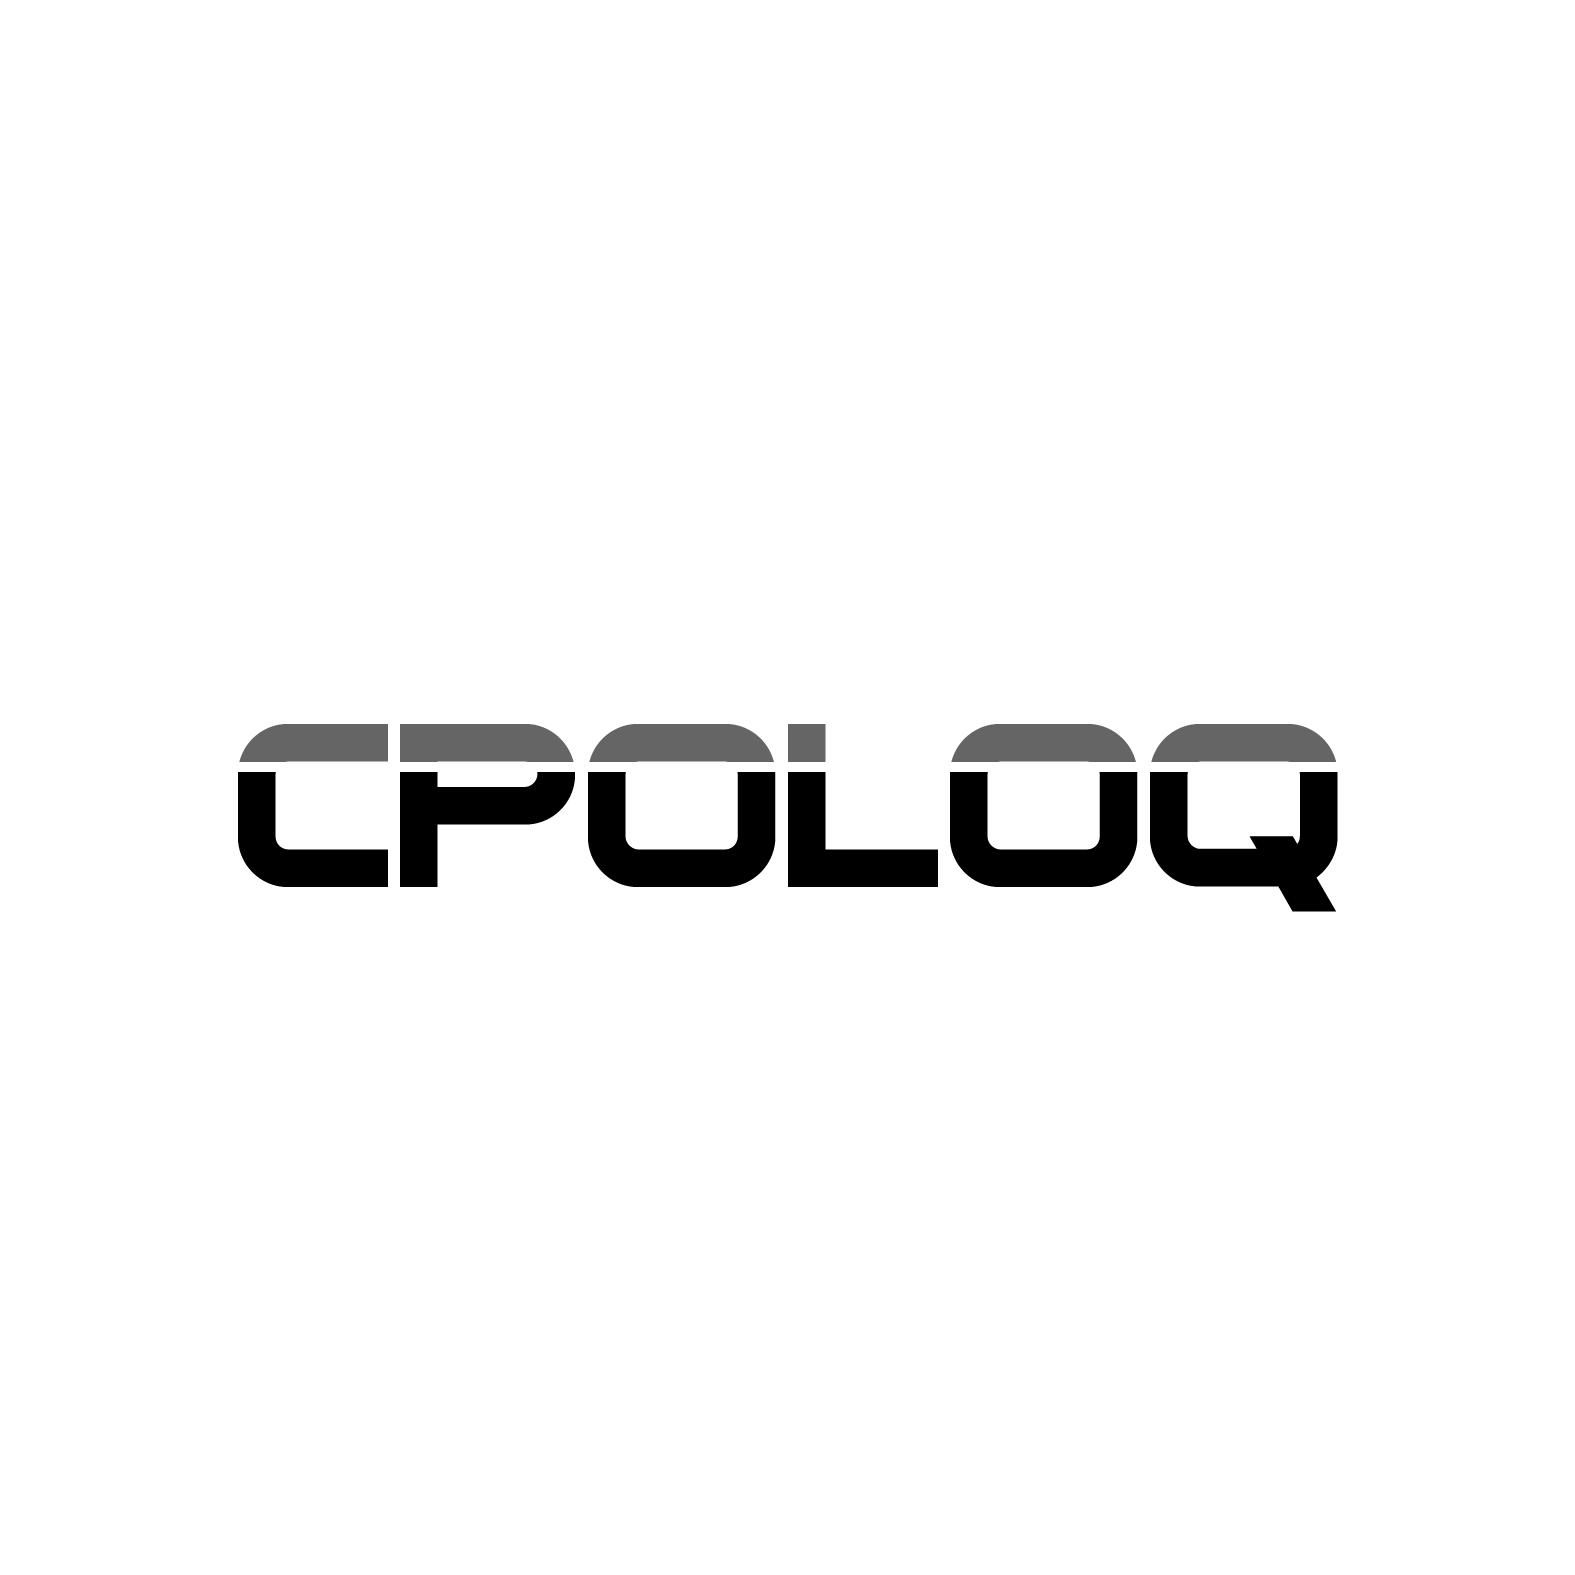 20类-家具CPOLOQ商标转让